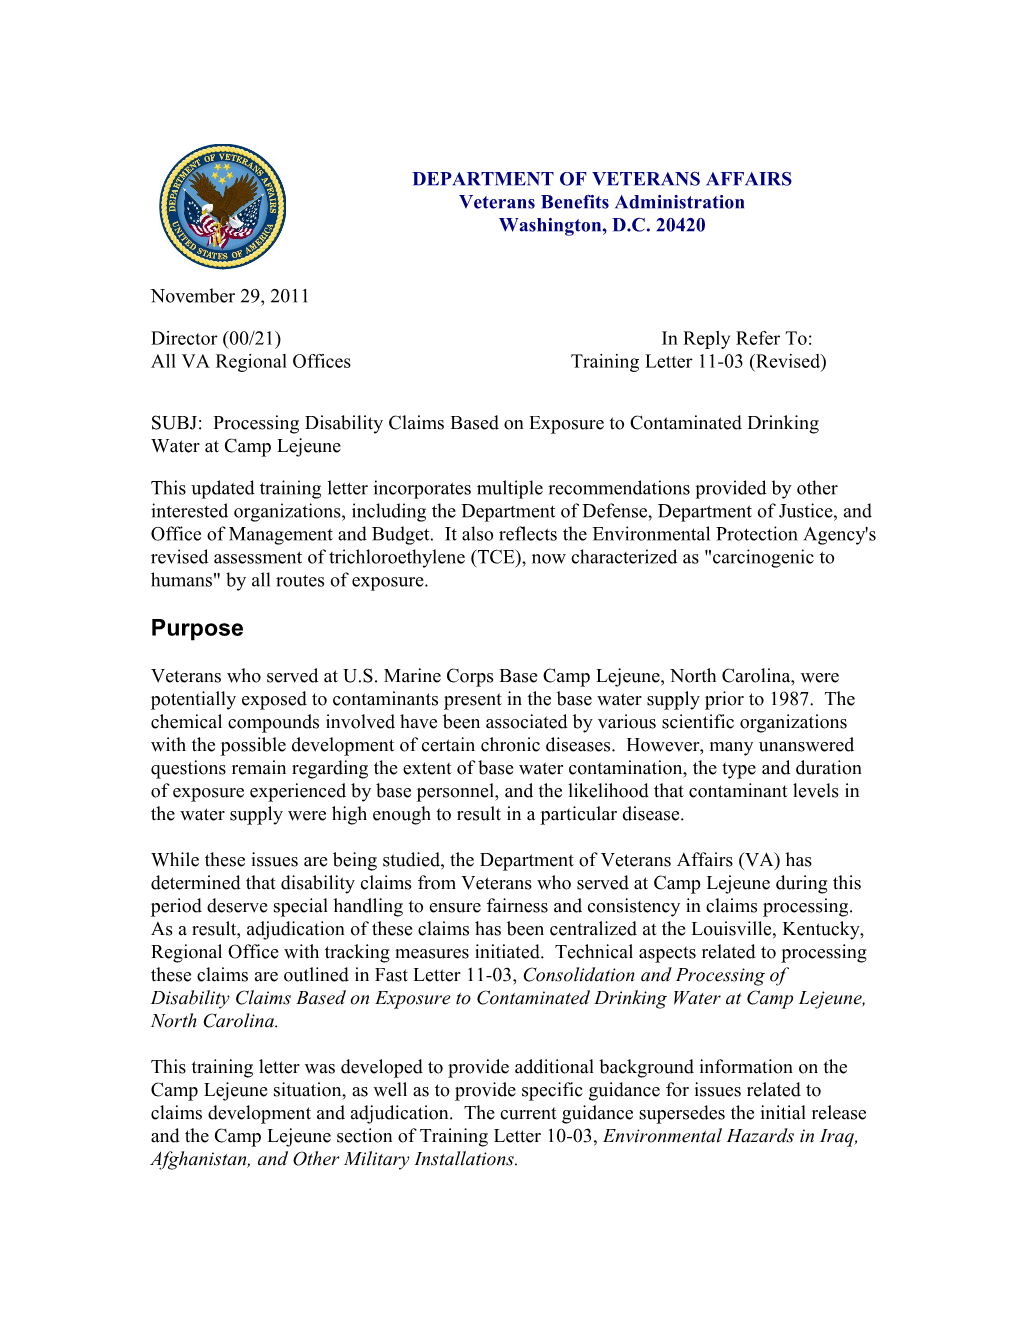 All VA Regional Offices Training Letter 11-03 (Revised)